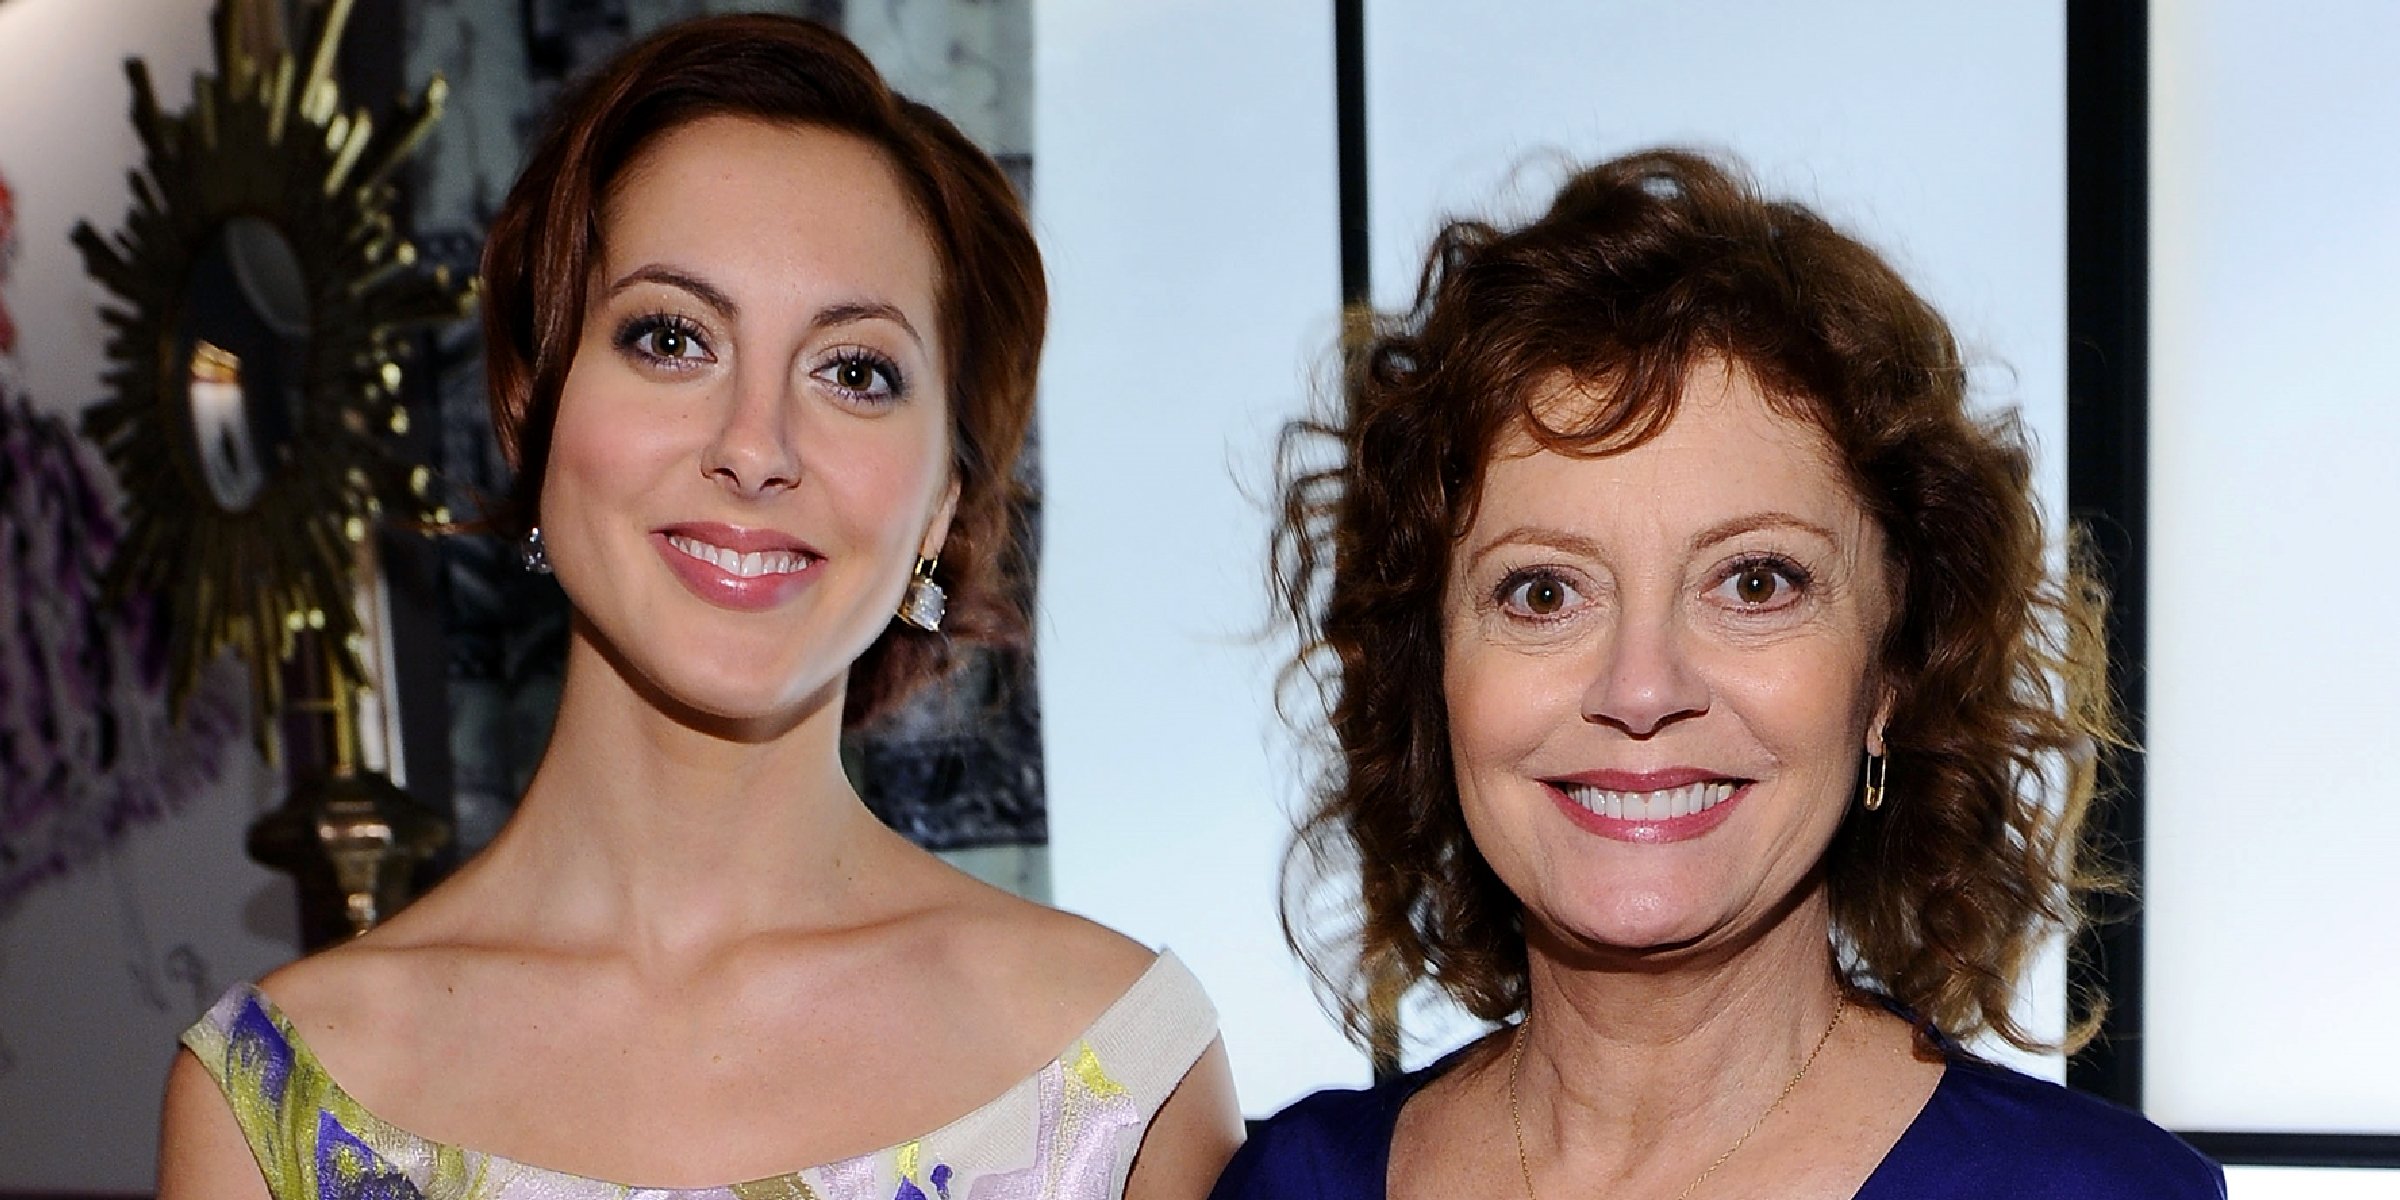 Eva Amurri and Susan Sarandon┃Source: Getty Images